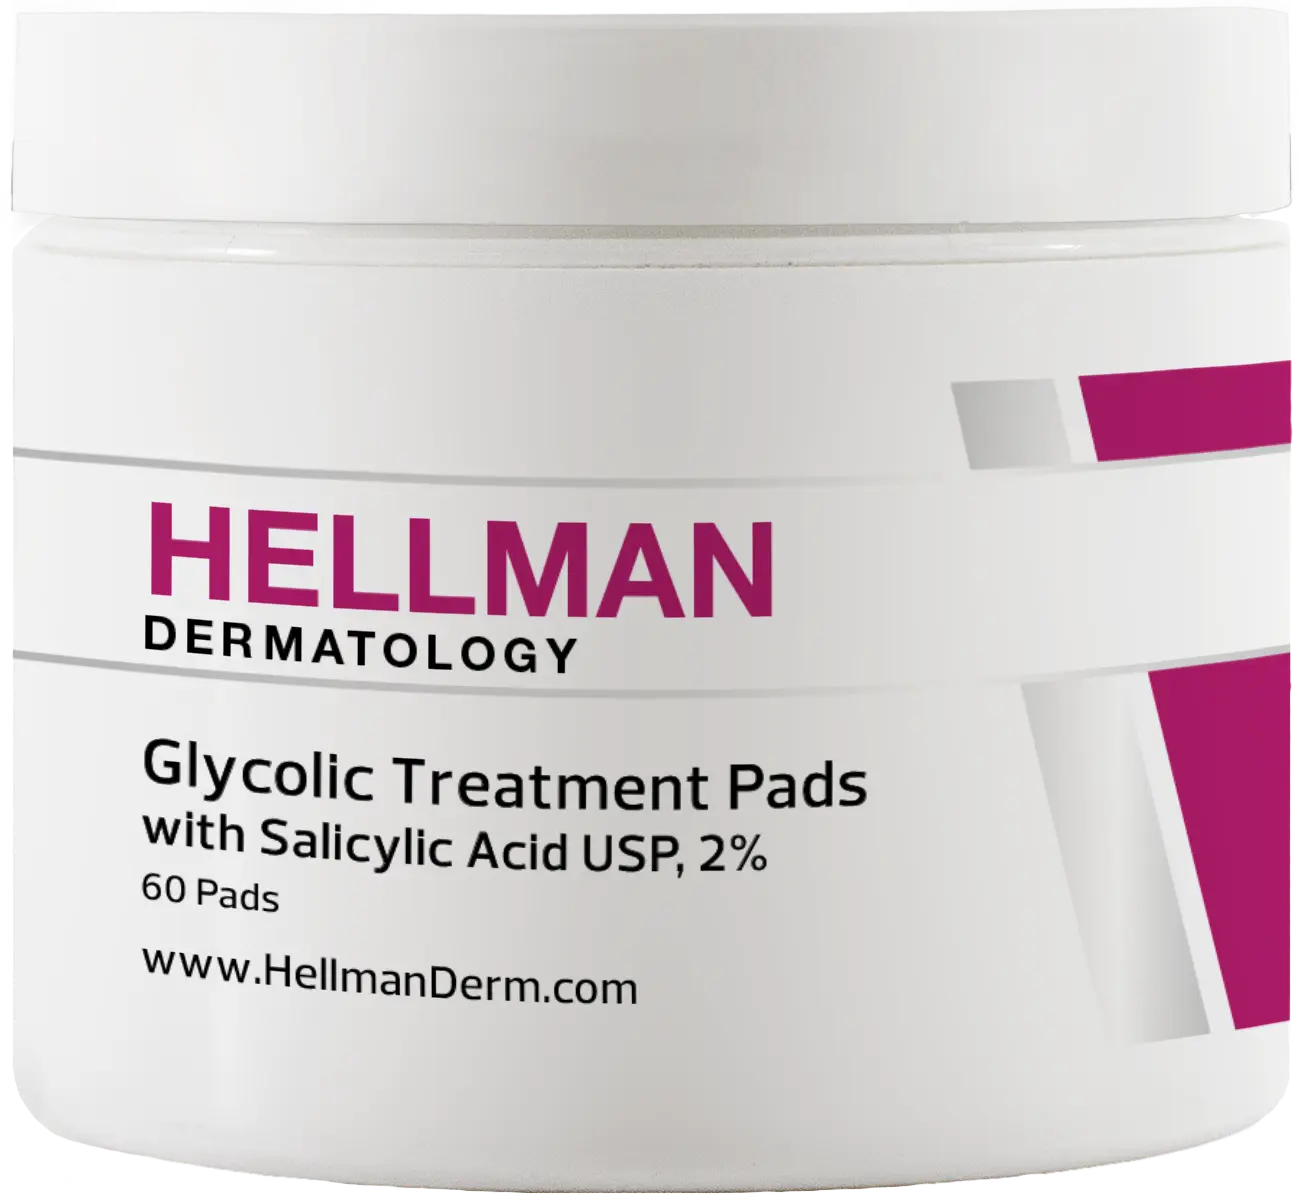 Glycolic Treatment Pads with Salicylic Acid USP, 2% 60 pads. Price: $30